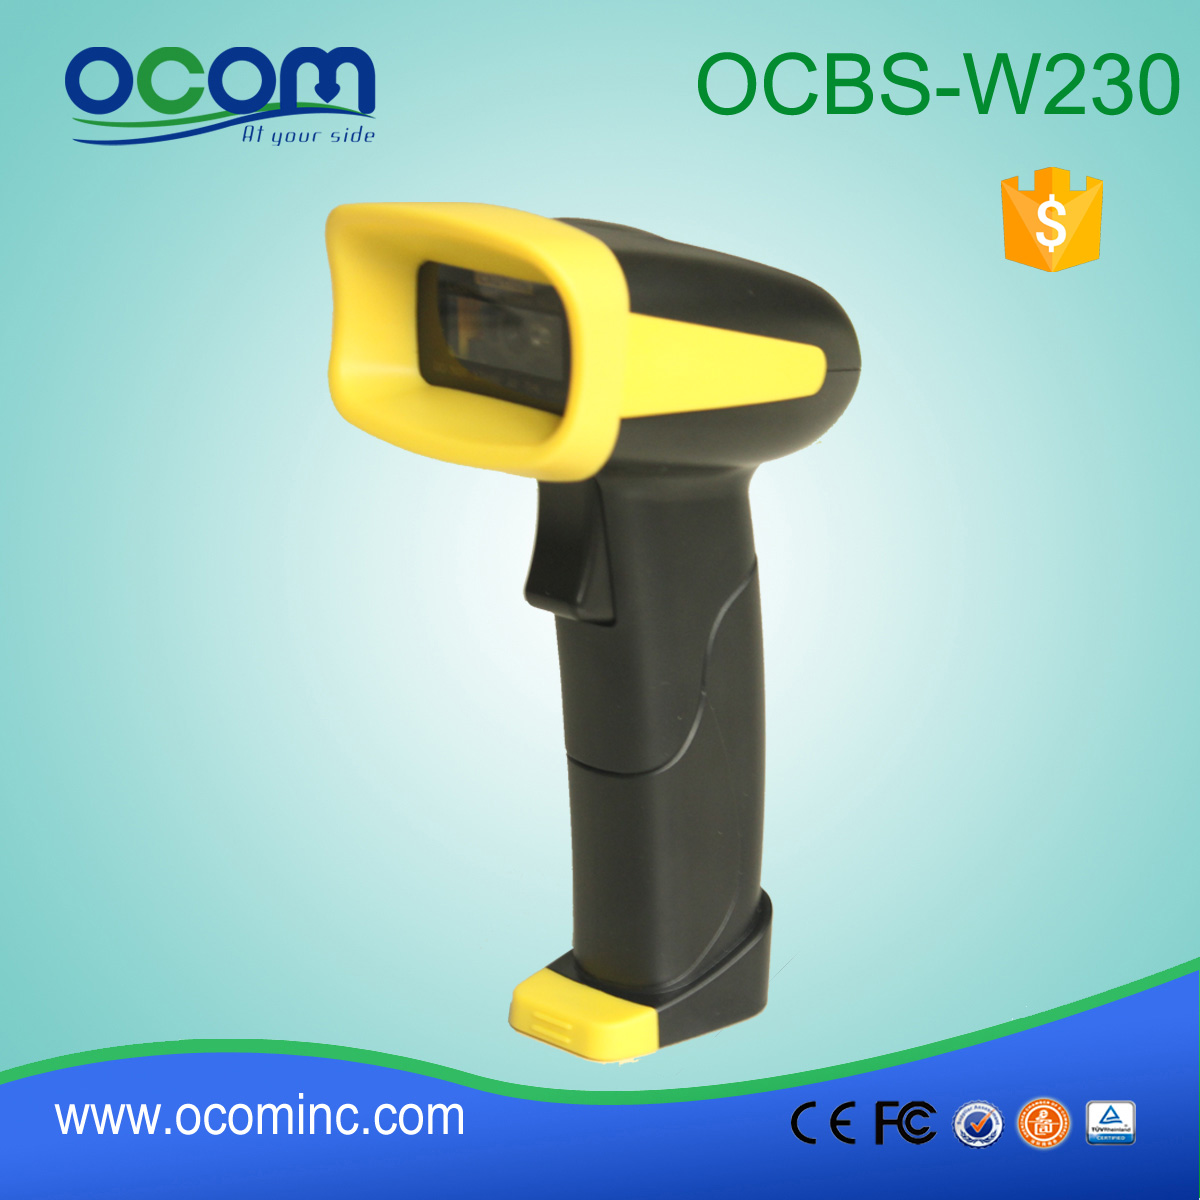 OCBS -W230 سوبر ماركت مايكرو USB صغير الروبوت بلوتوث اللاسلكية ماسح الباركود